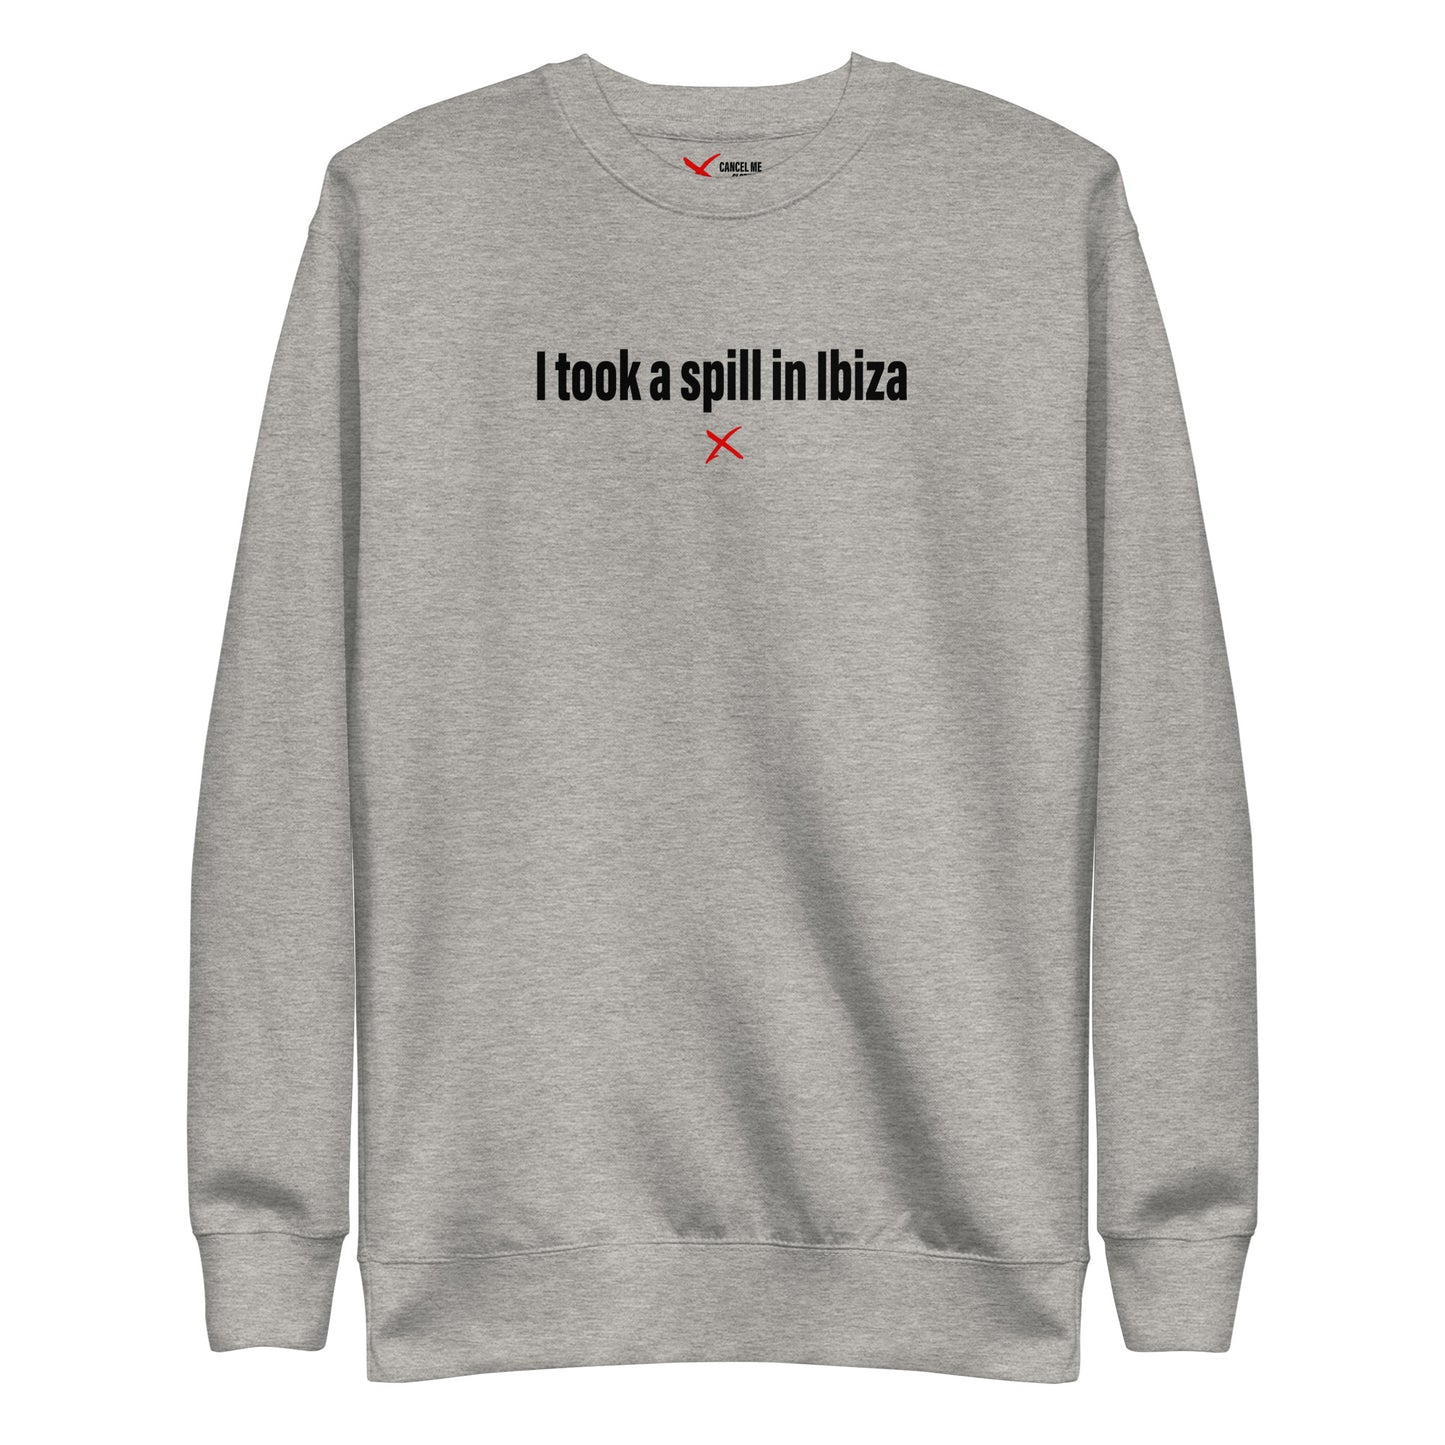 I took a spill in Ibiza - Sweatshirt